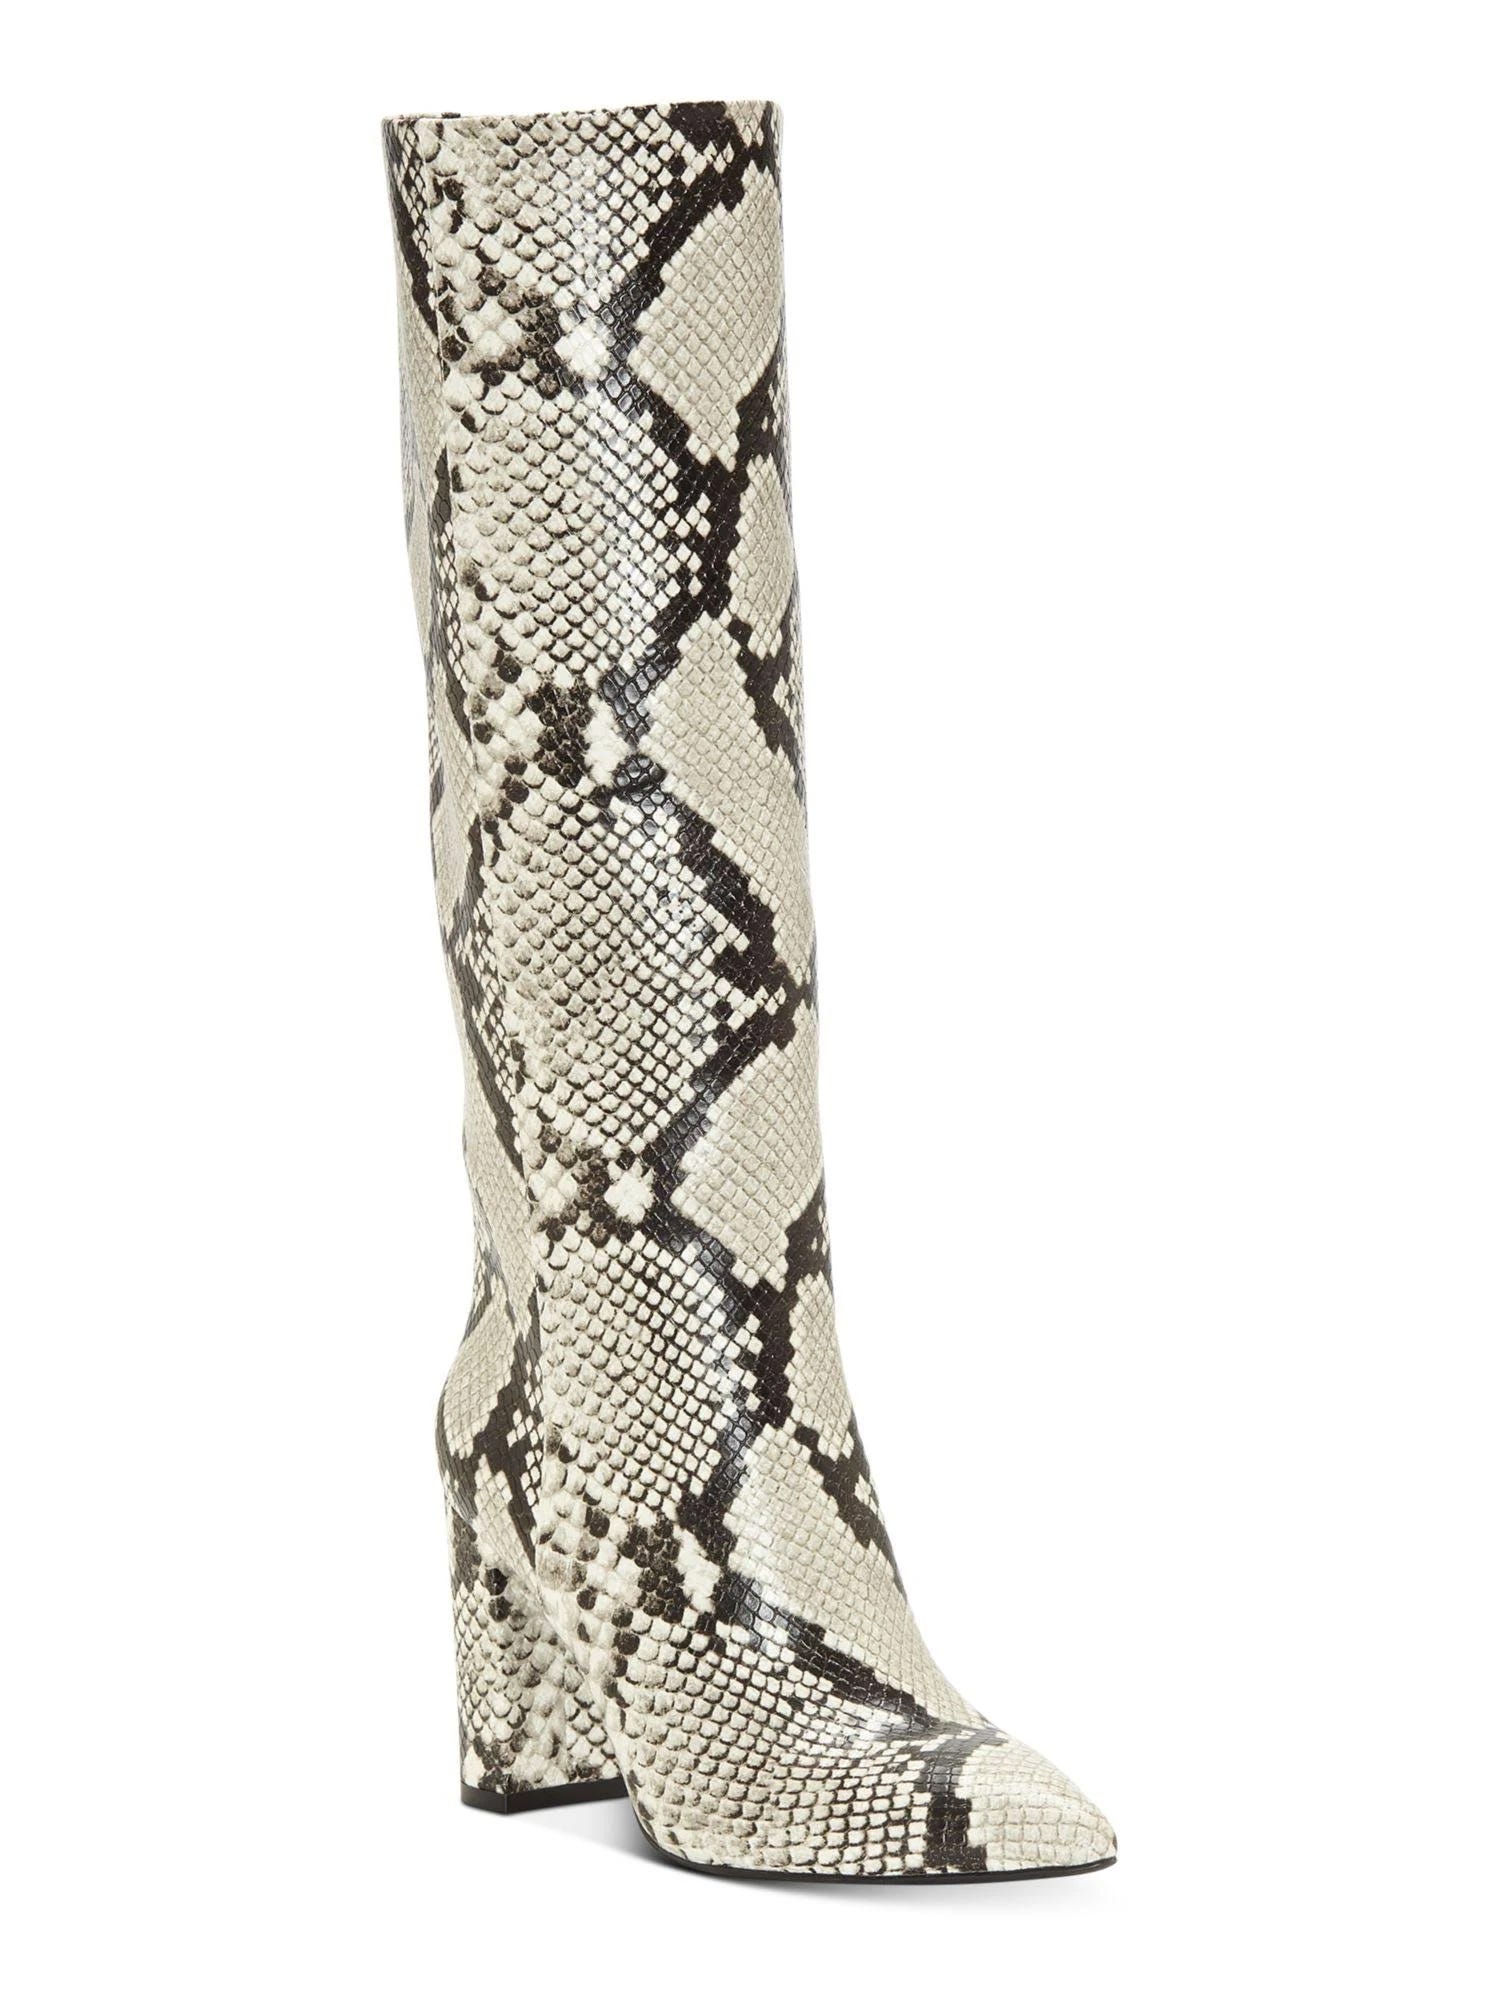 Stylish Snakeskin Block-Heel Boot by INC | Image